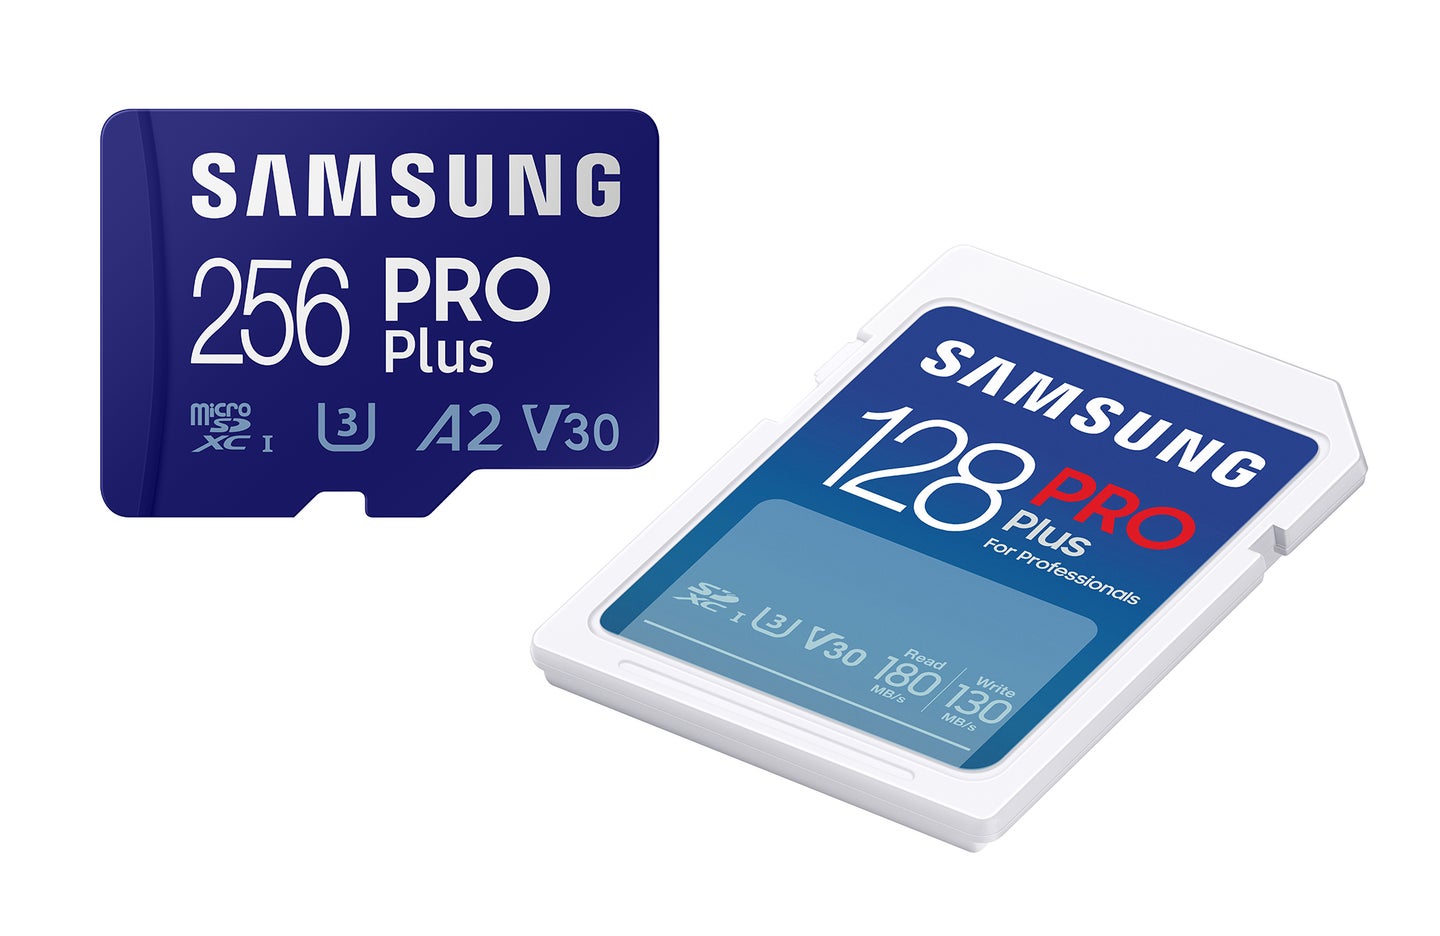 Micro SD PRO+ 64GB Memory Card w/ Adapter Memory & Storage - MB